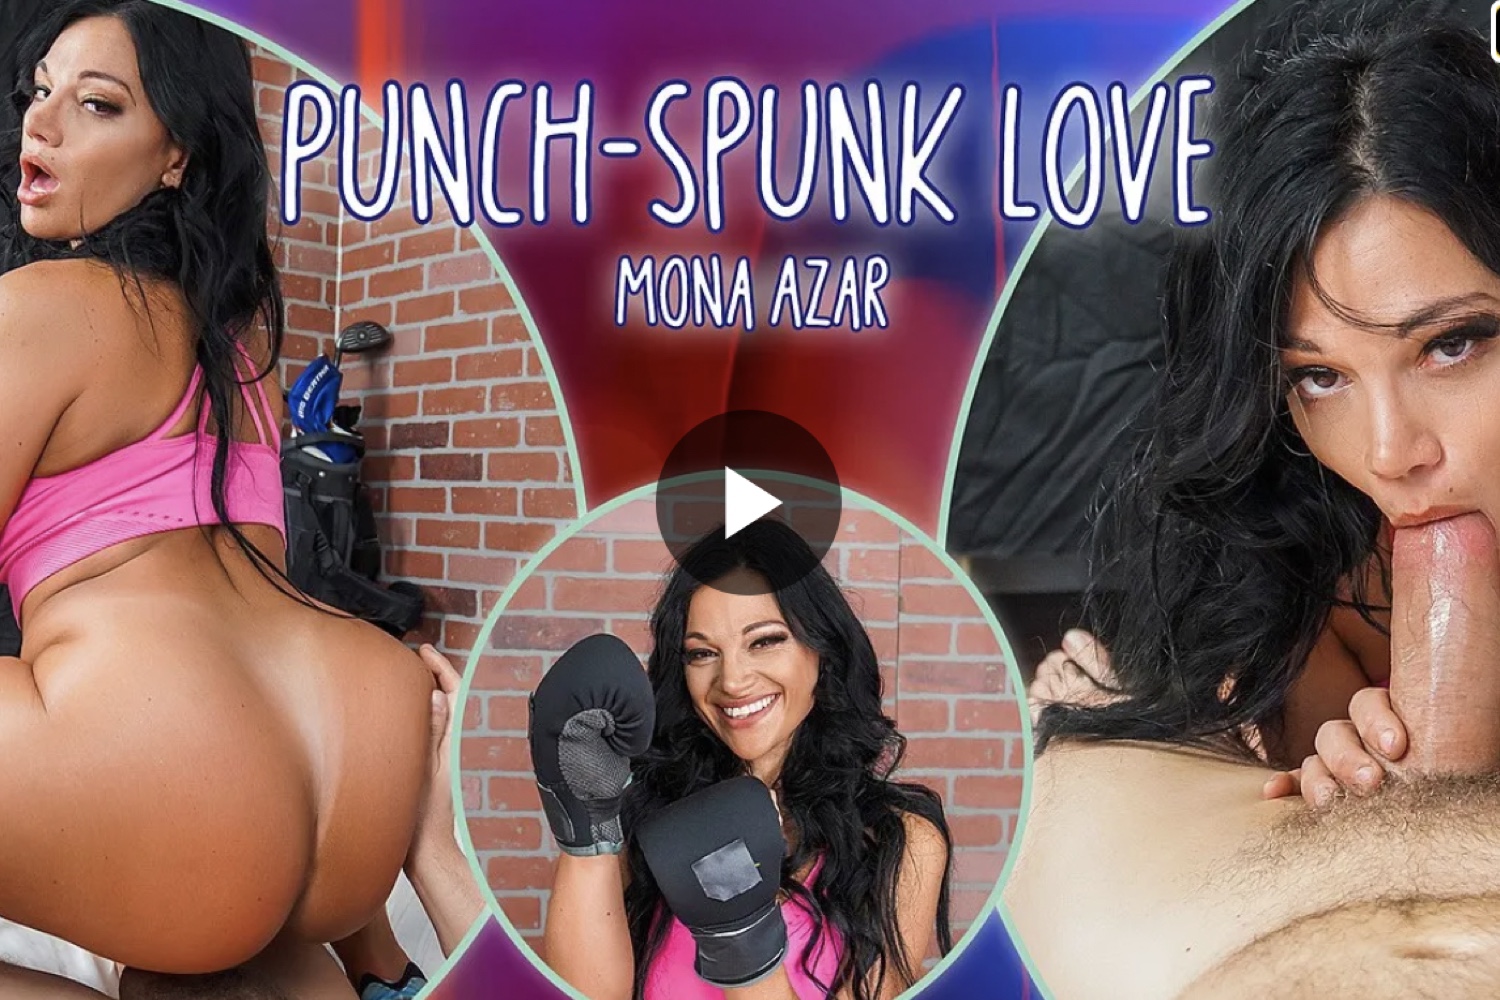 Punch-Spunk Love - Mona Azar VR Porn - Mona Azar Virtual Reality Porn